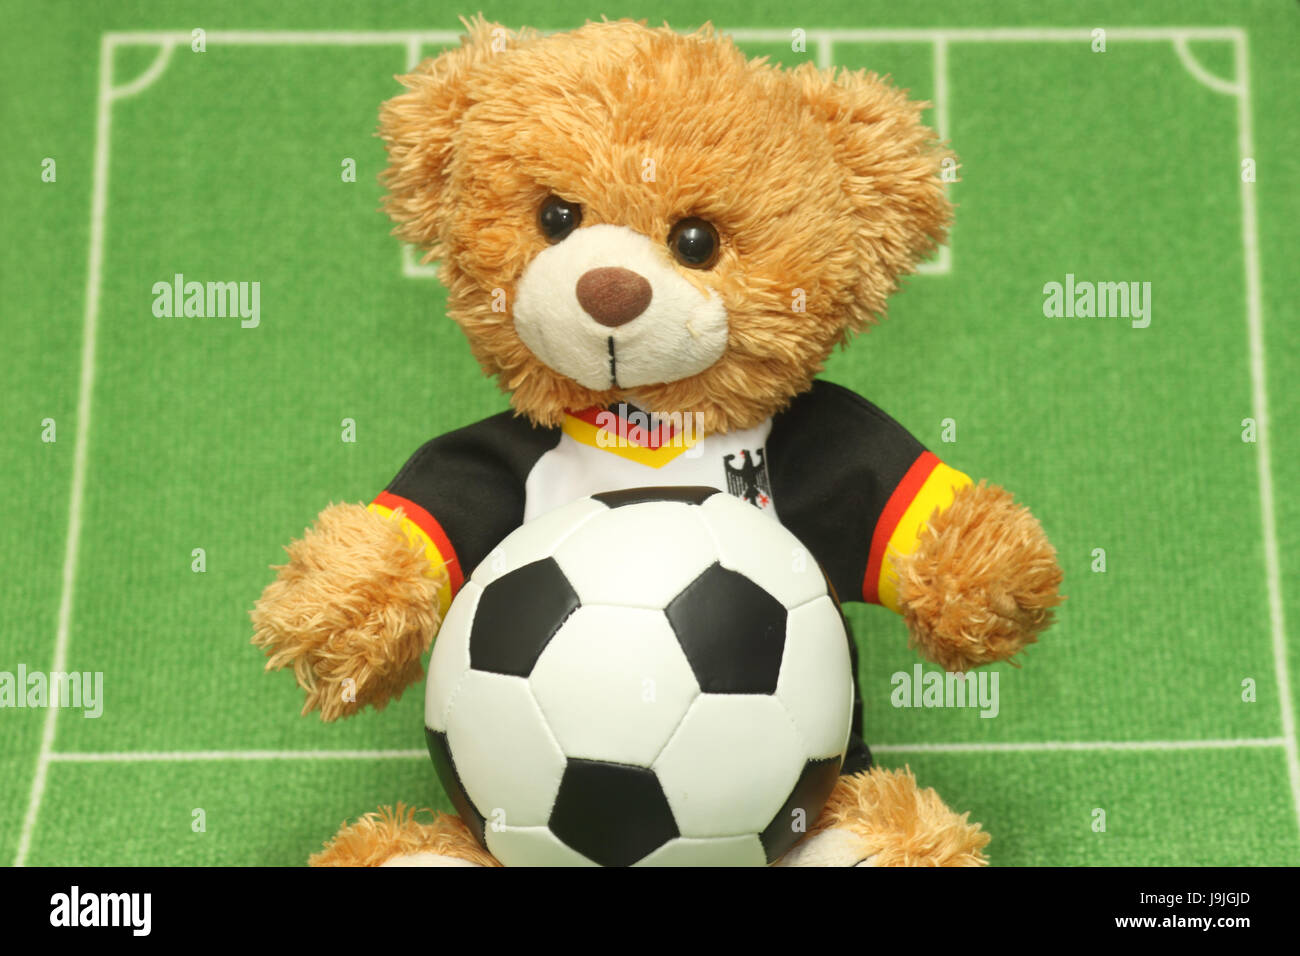 Teddy bear with football shirt on lawn background Stock Photo - Alamy